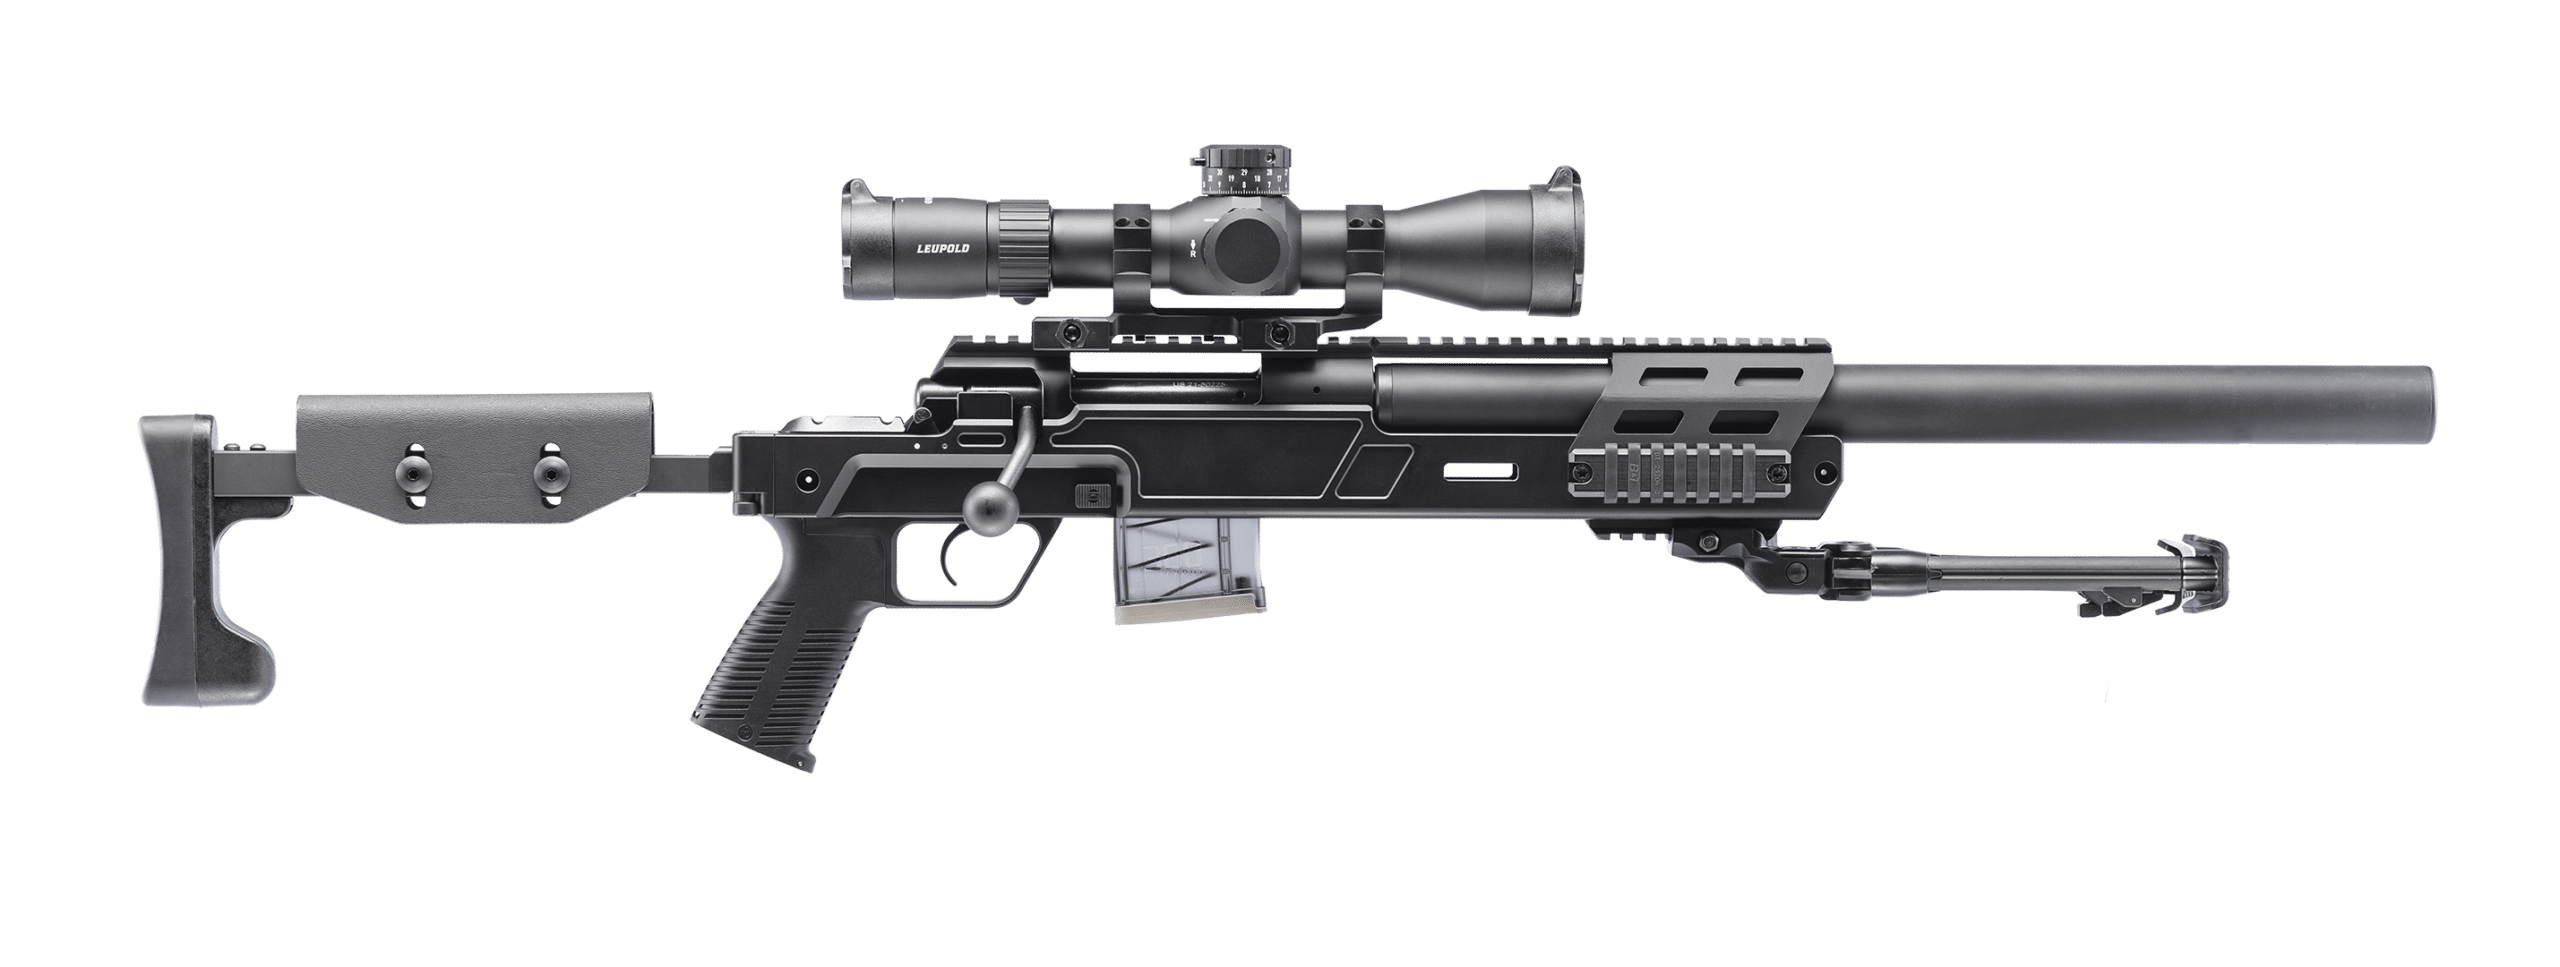 SPR300 Pro Pistol Kit